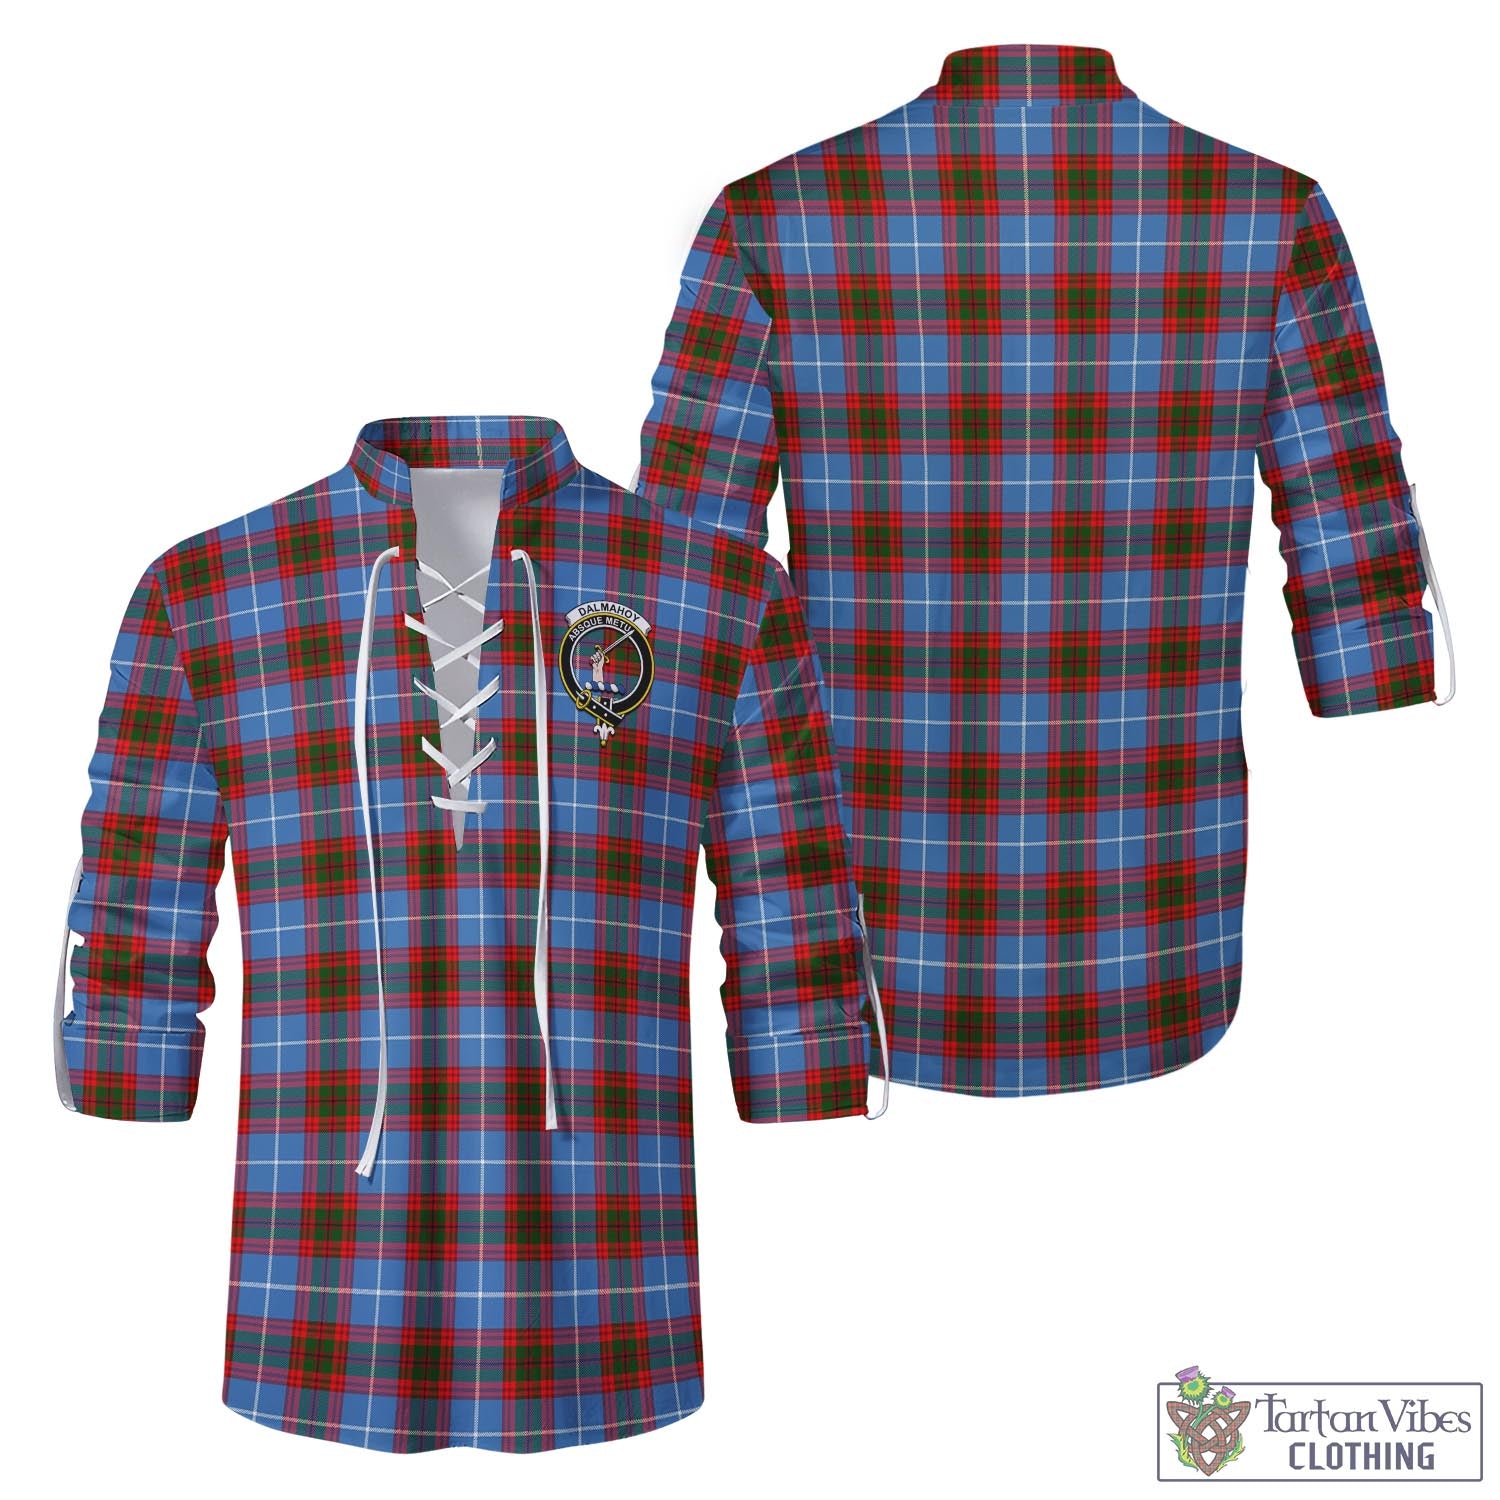 Tartan Vibes Clothing Dalmahoy Tartan Men's Scottish Traditional Jacobite Ghillie Kilt Shirt with Family Crest